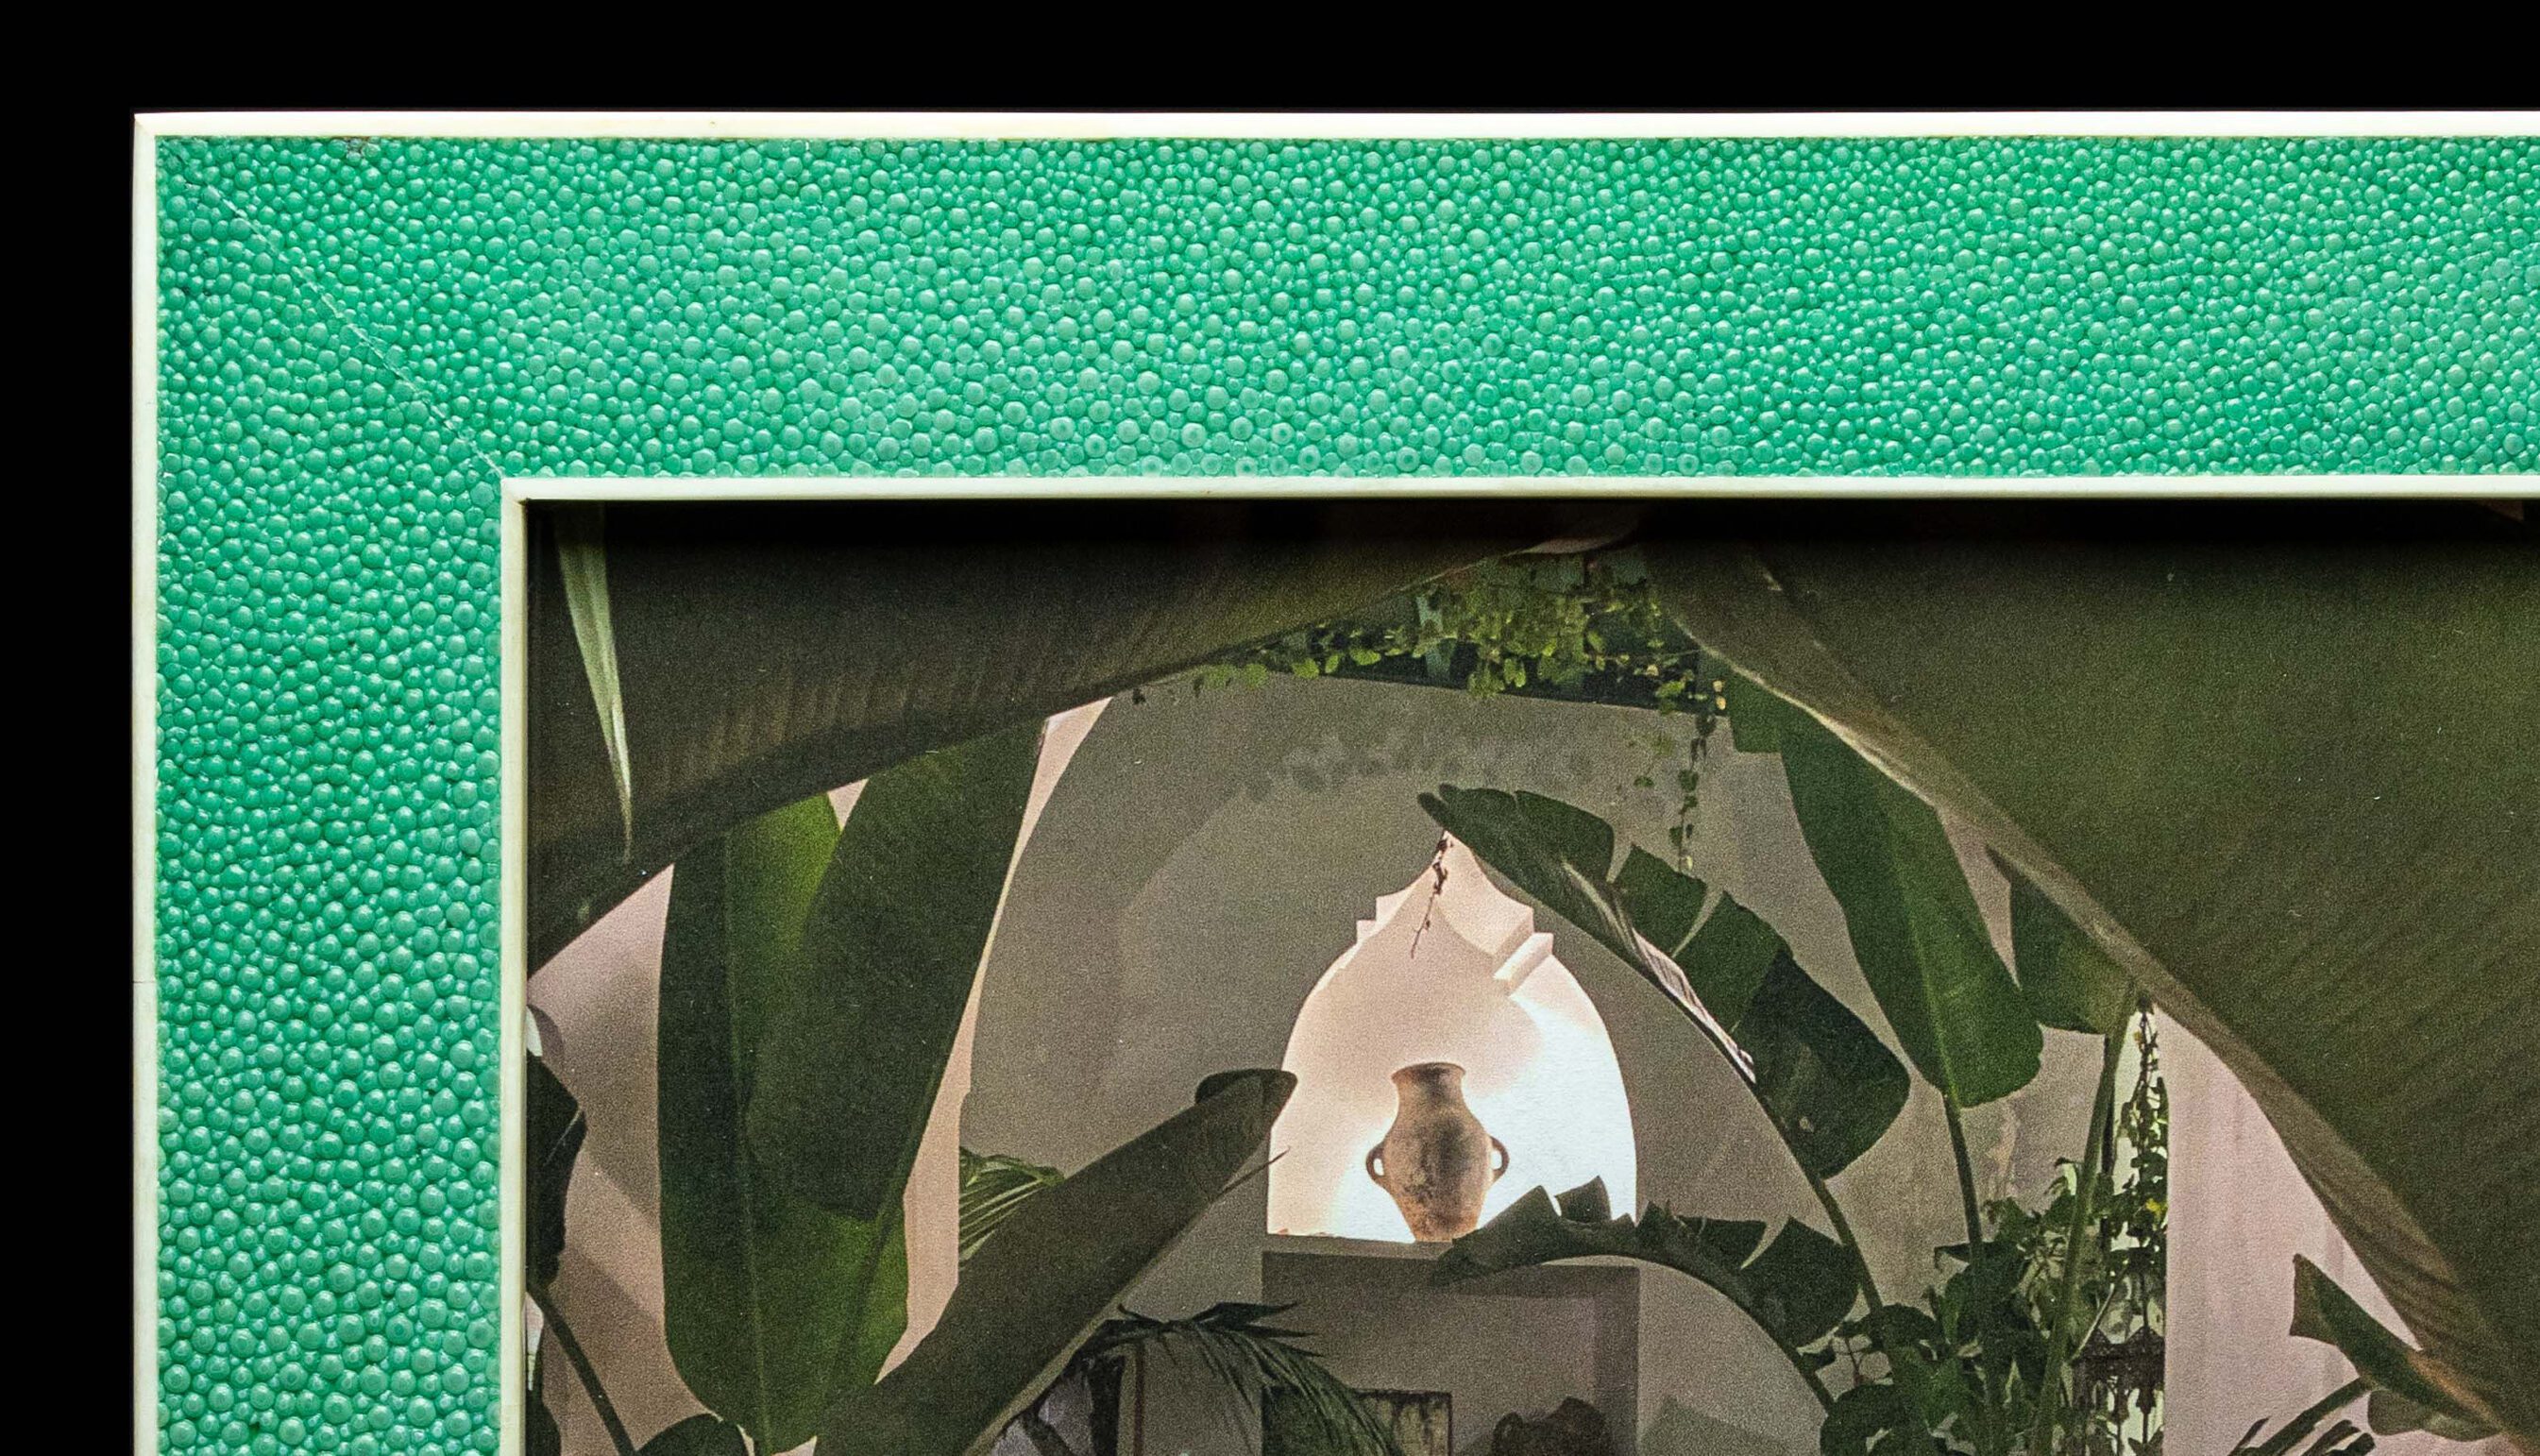 Large Green Shagreen Frame